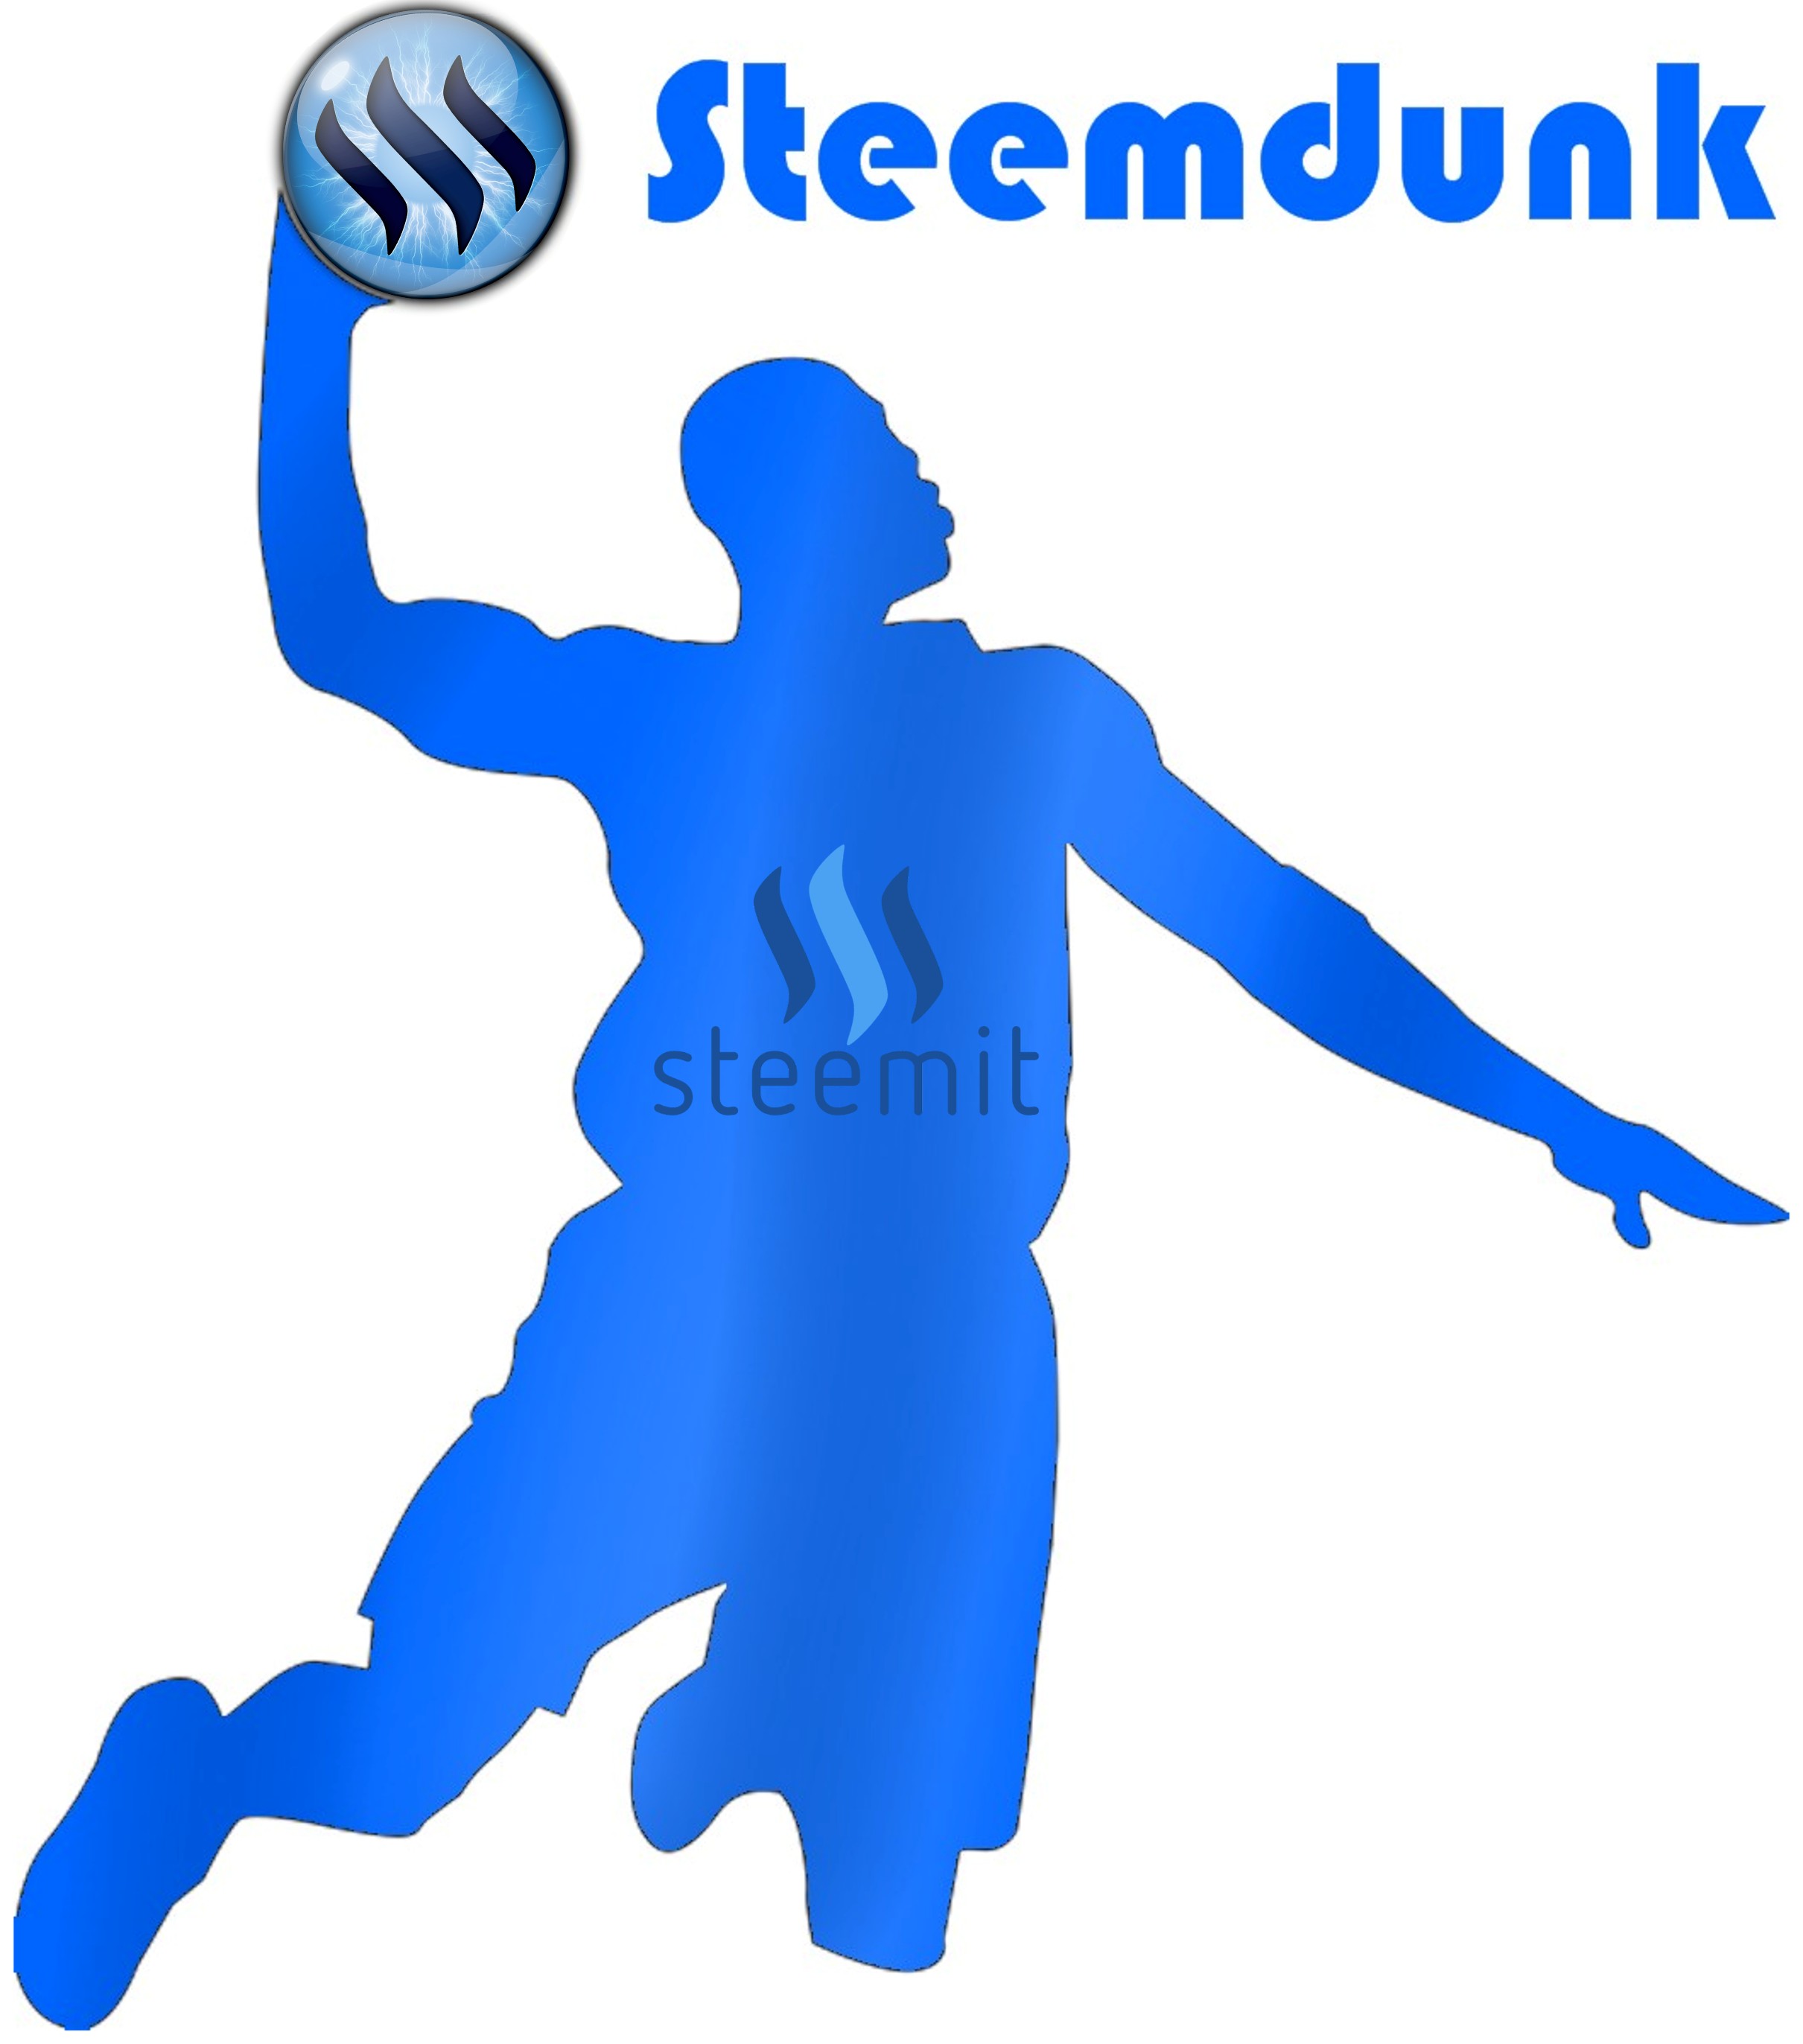 SD logo.jpg